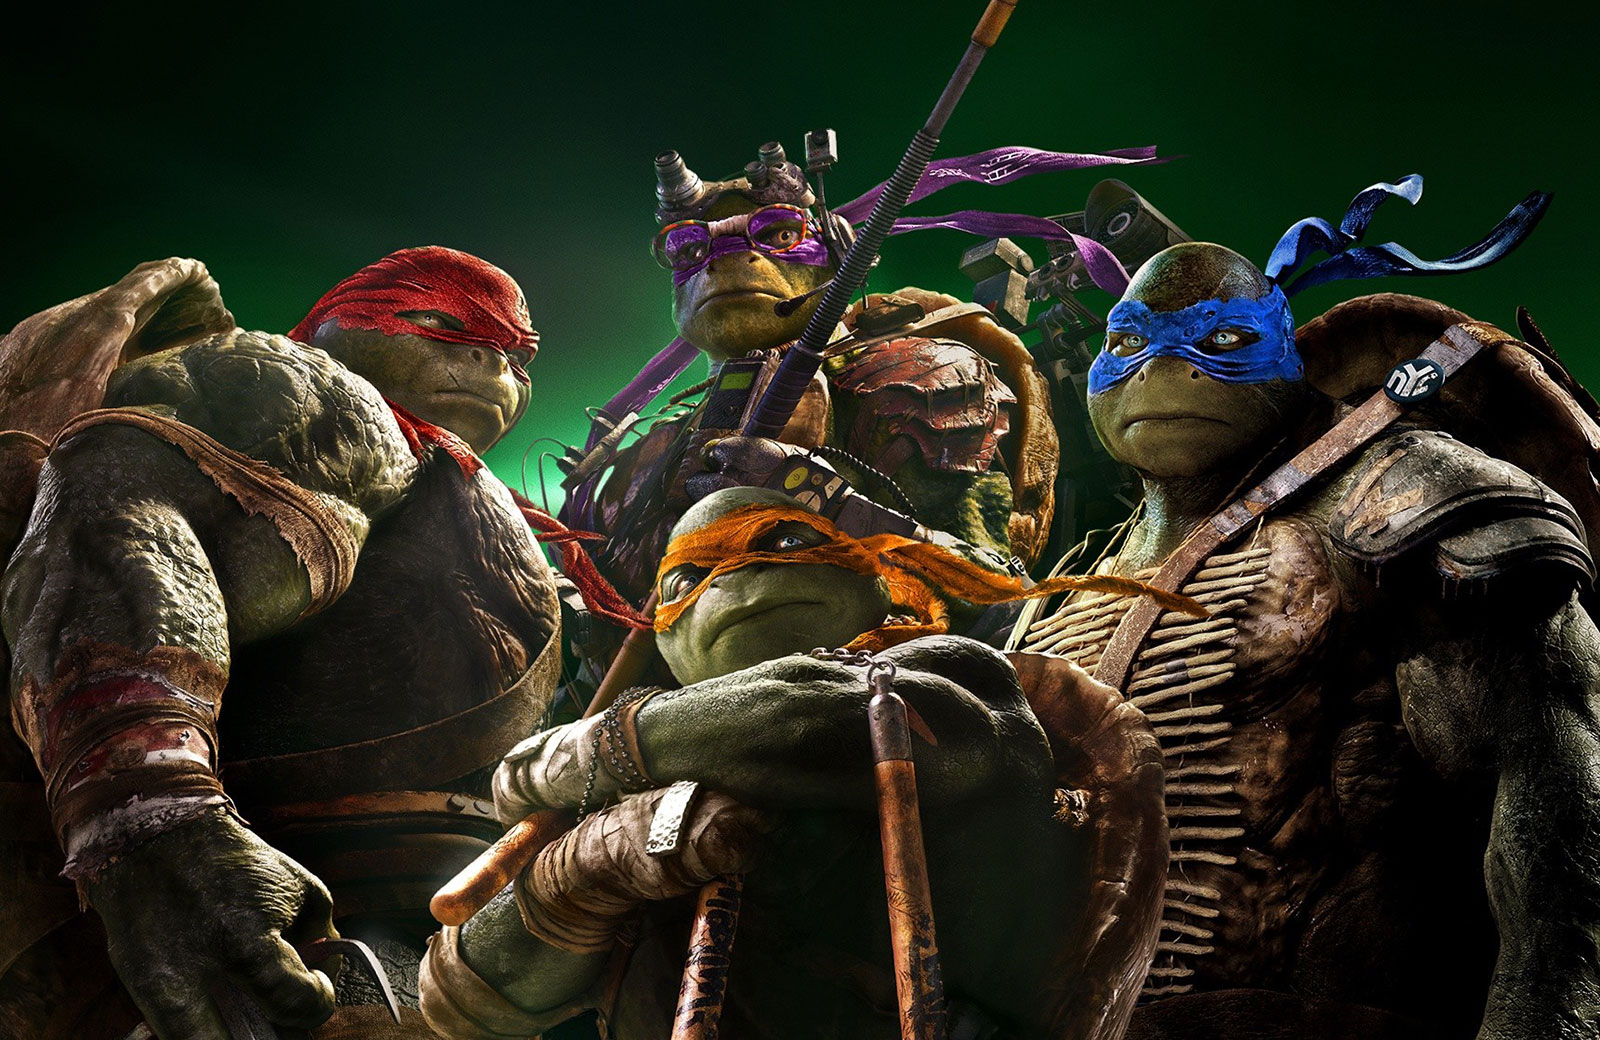 http://planetakino.ua/f/1/movies/teenage-mutant-ninja-turtles/Teenage-Mutant-Ninja-Turtles-afisha3.jpg